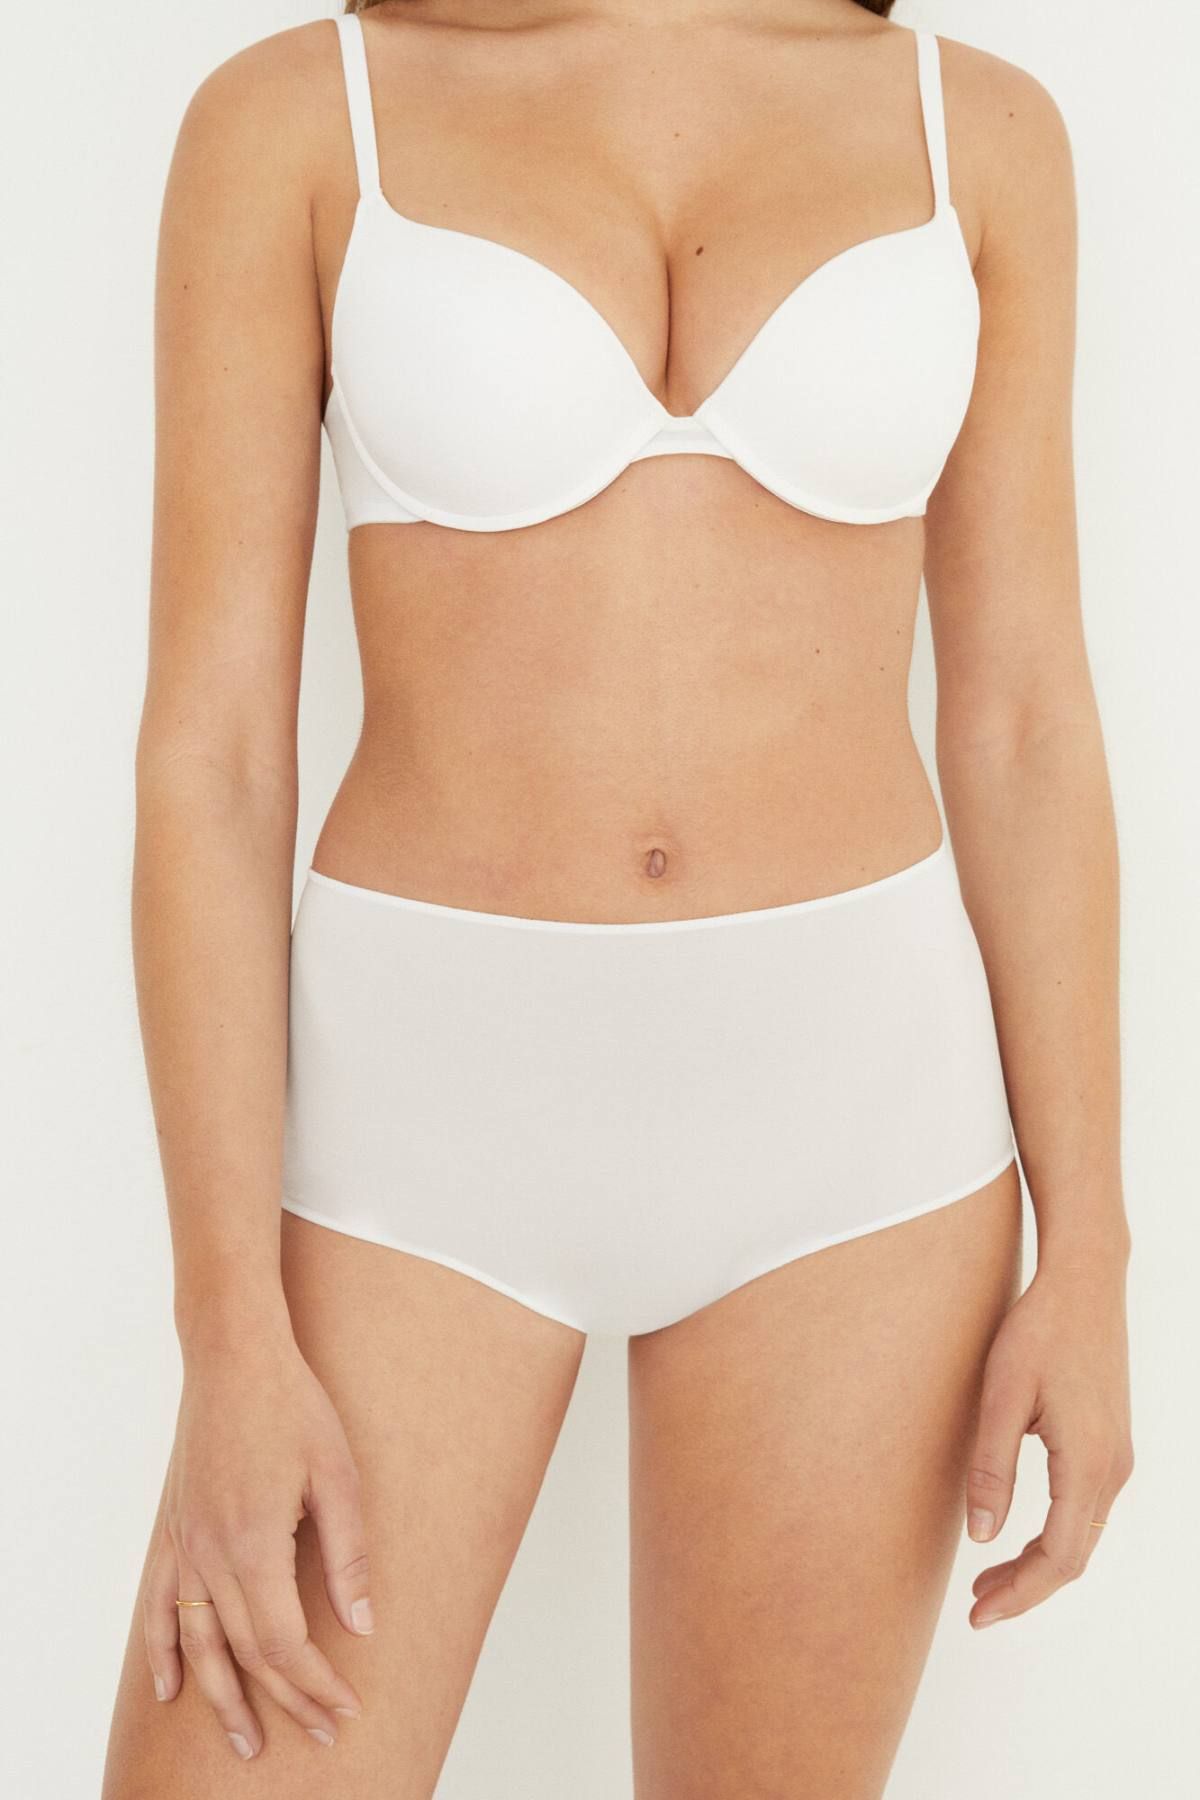 Women's Microfiber Panties Pack, Moisture-Wicking Stretch Underwear Girls  Underpants Cotton Breathable Briefs 5PCS (White)